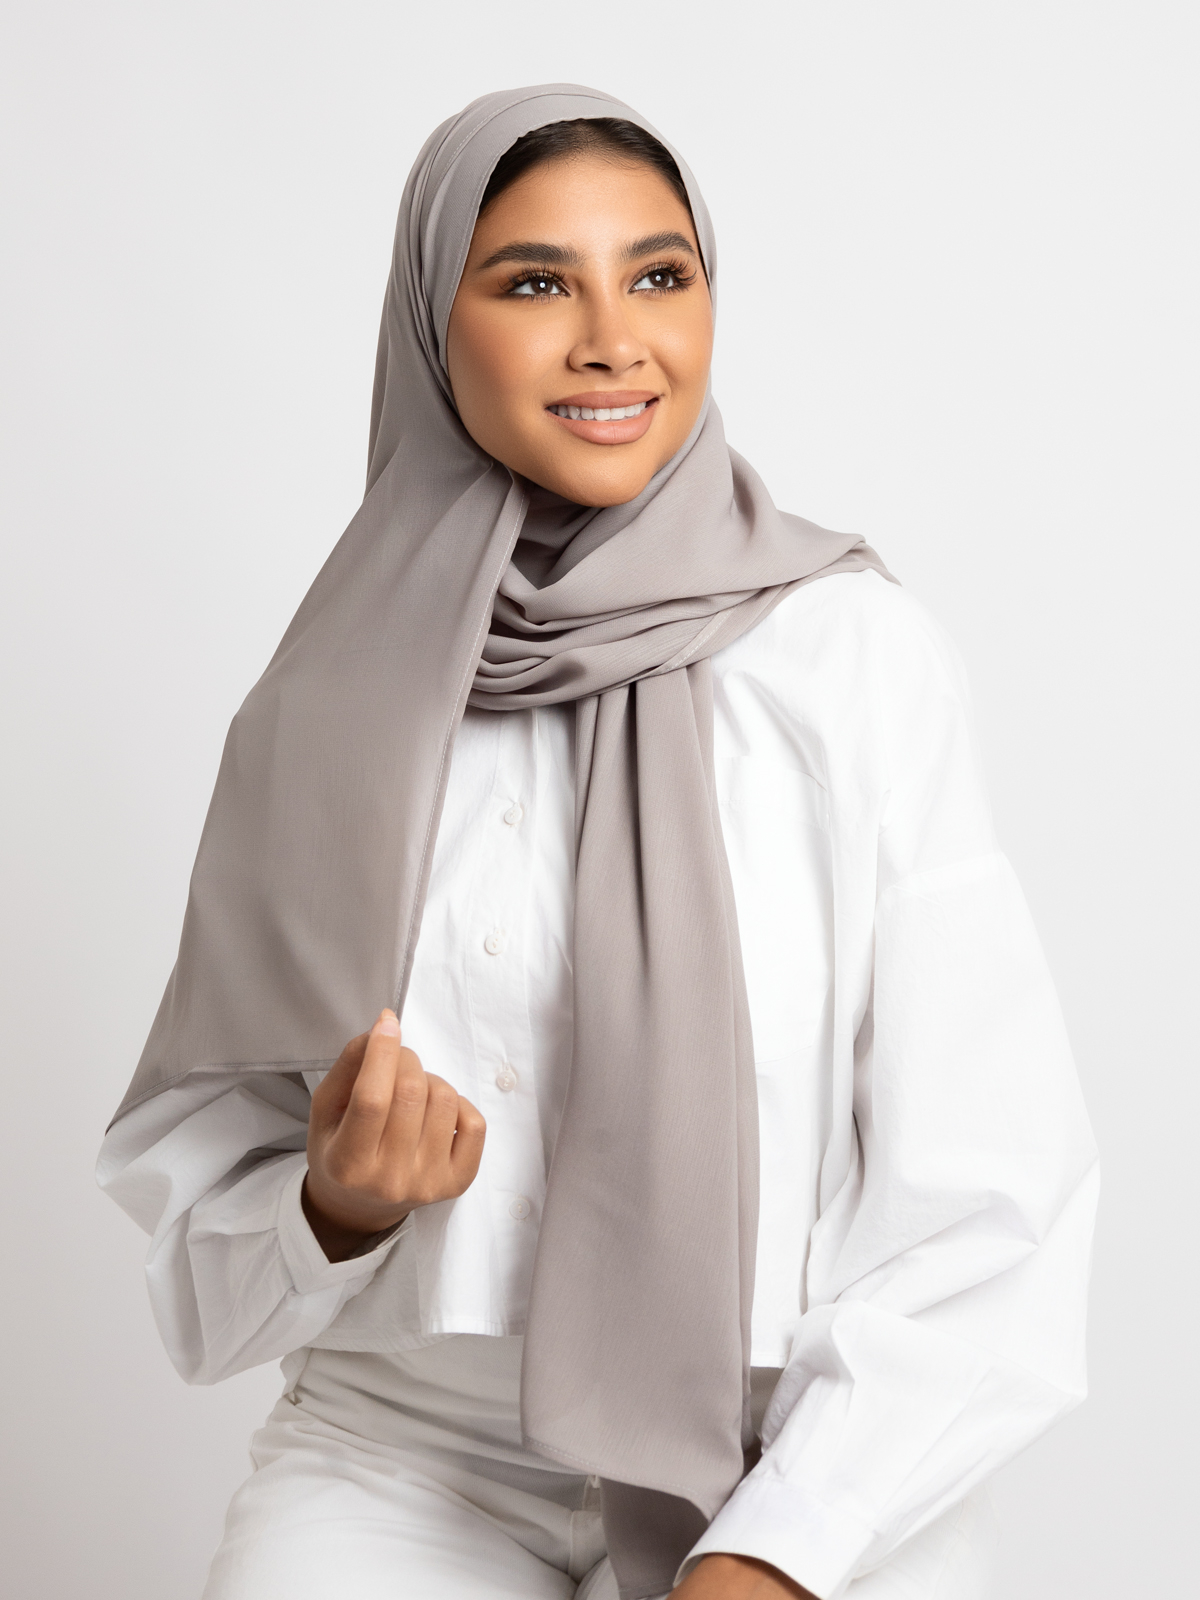 Luxurious chiffon hijab plain tarha 200 cm long gray color high quality material online in ksa by kaafmeem